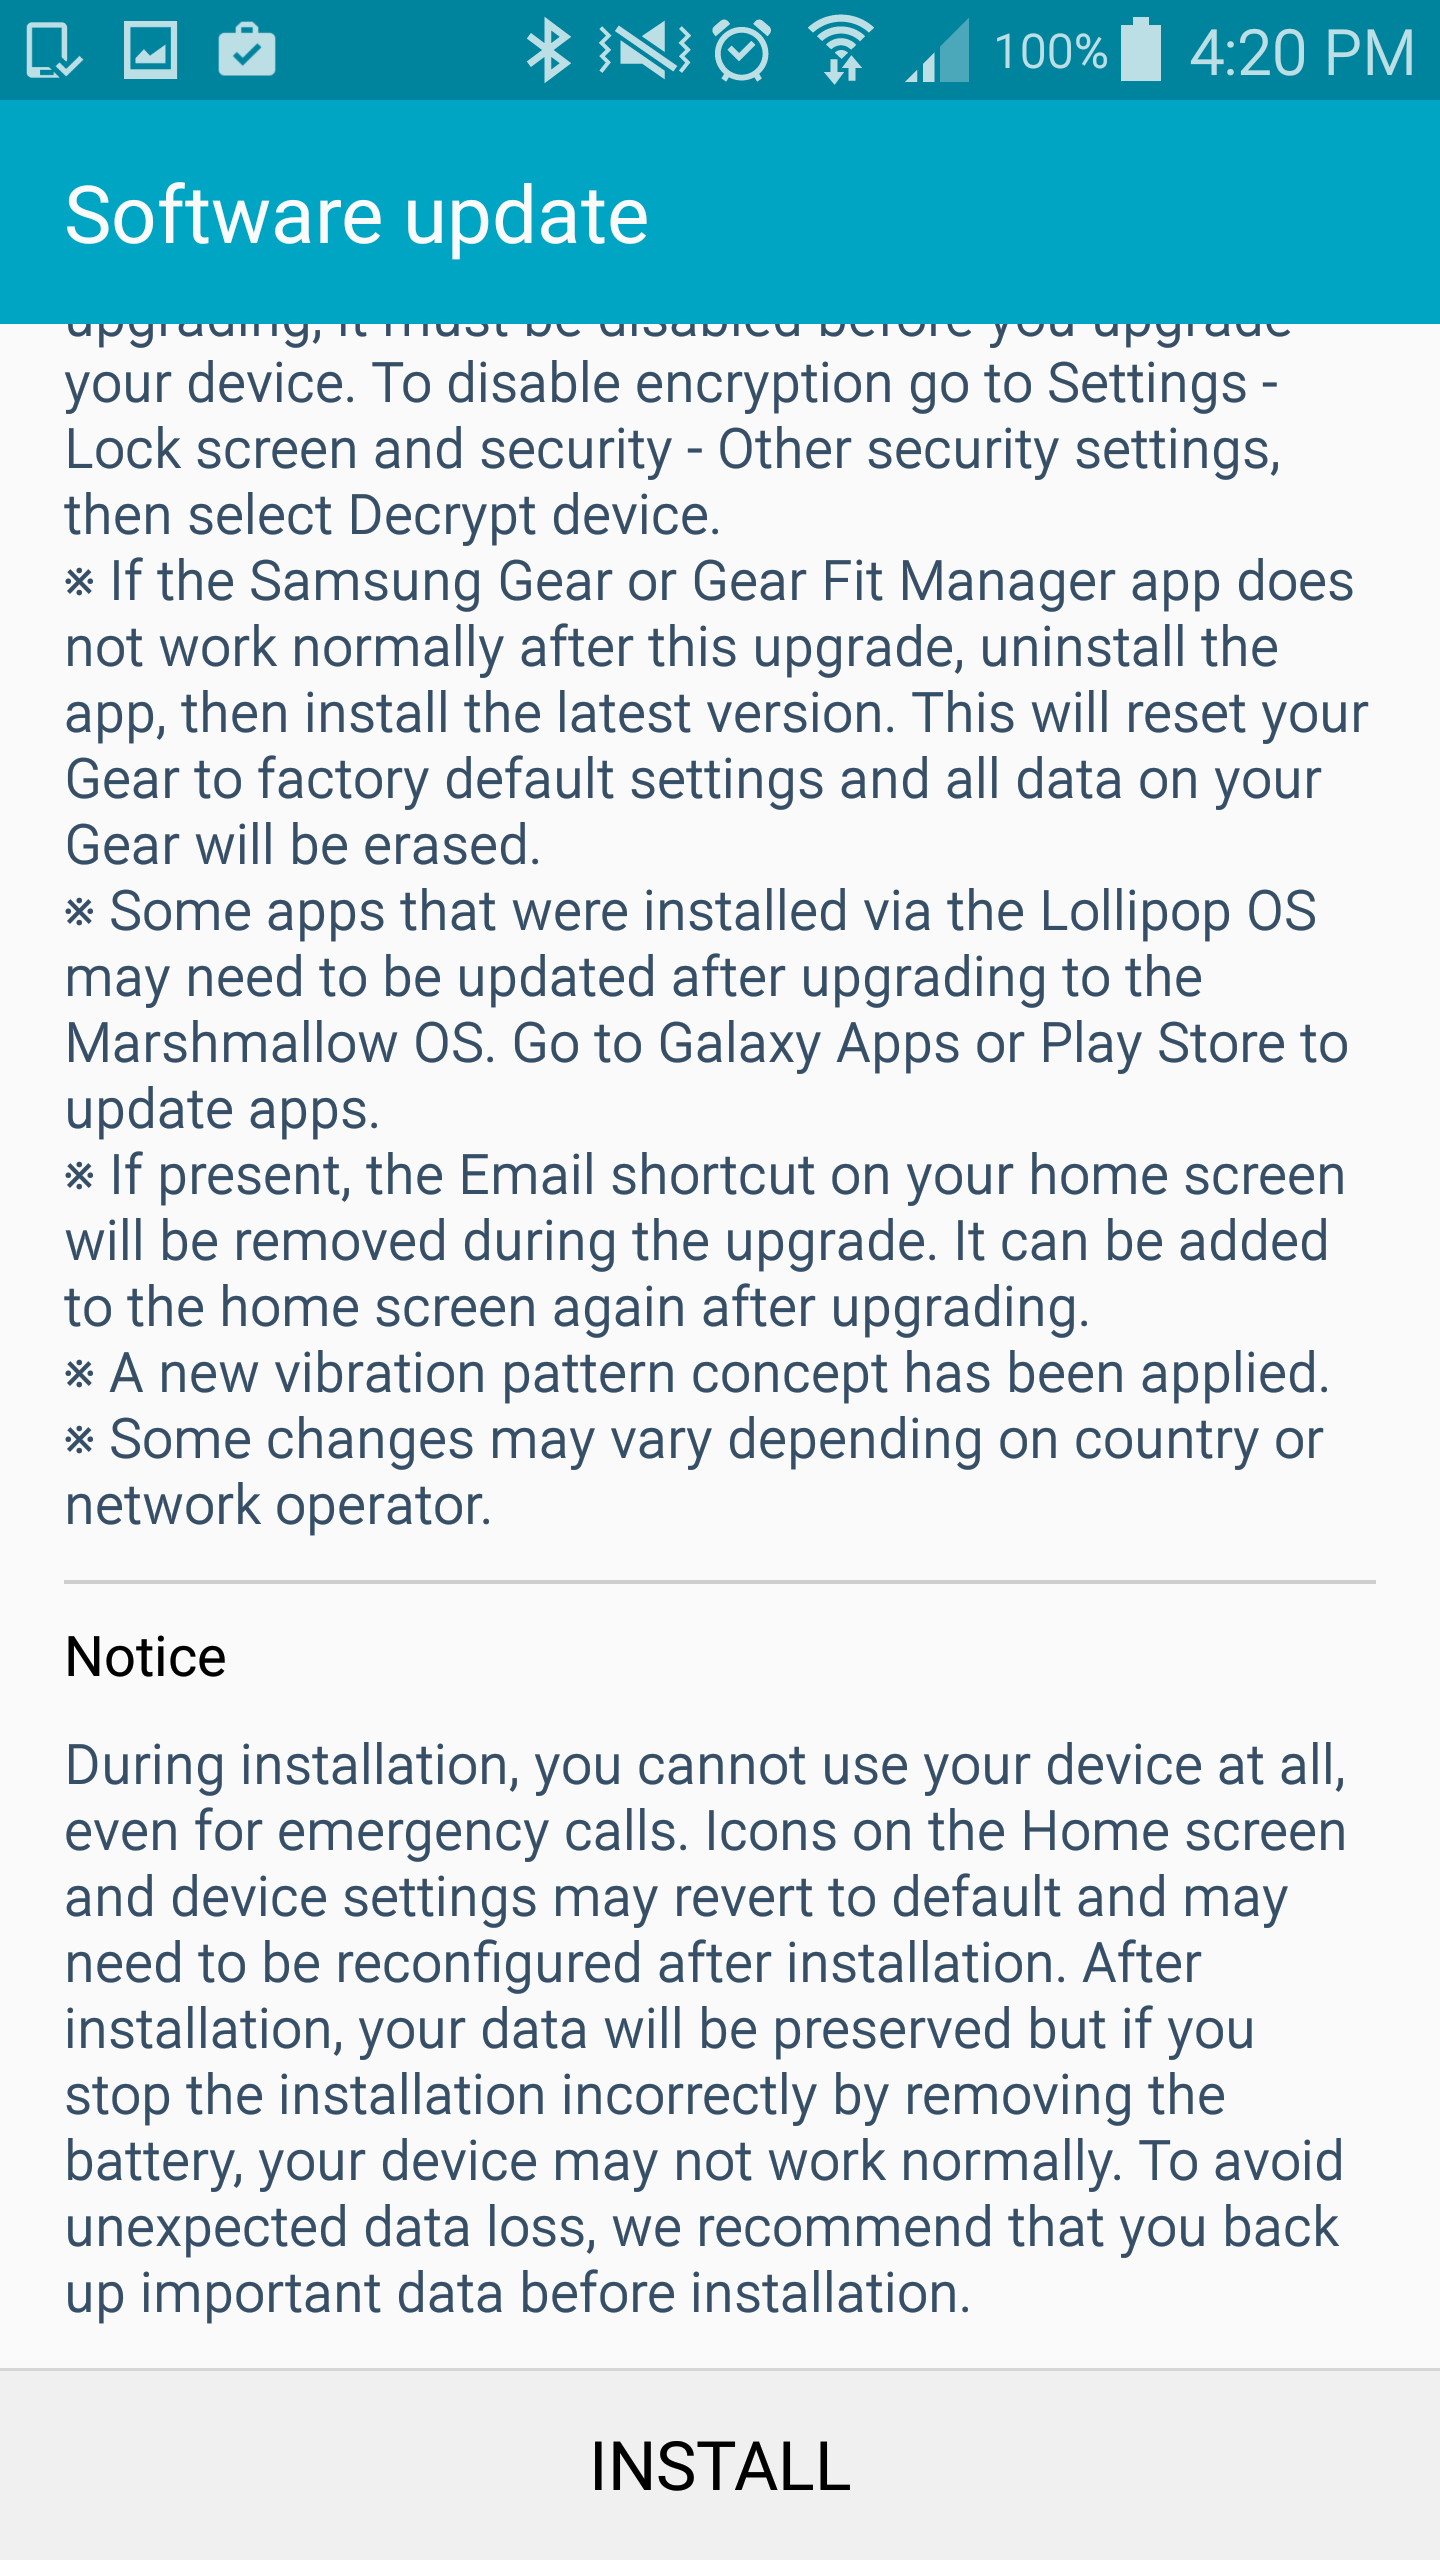 Galaxy Note 4 Marshmallow update